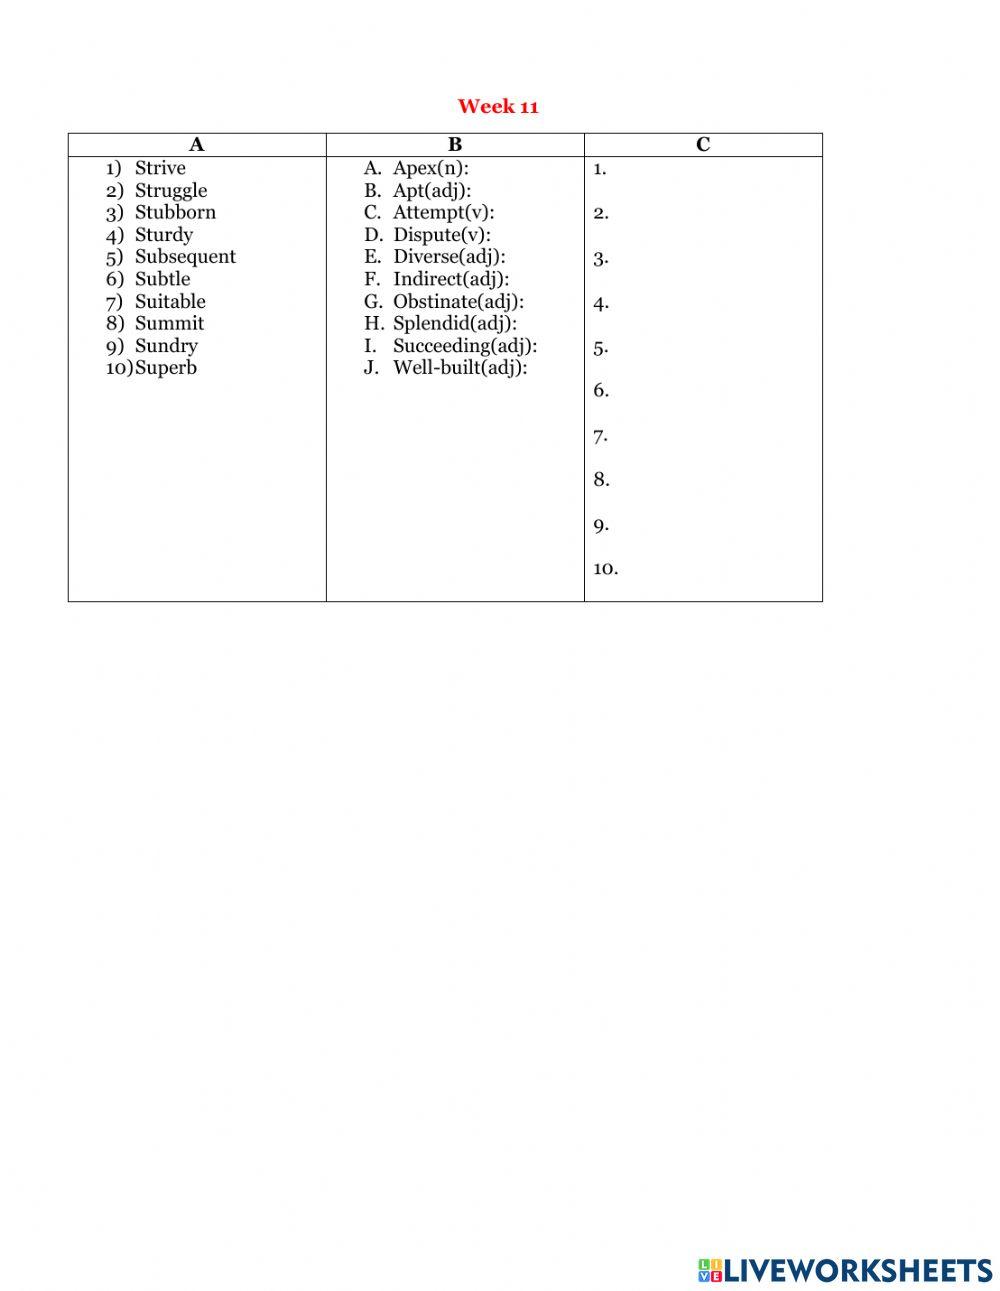 Ifl synonyms level 1(week 9-12)